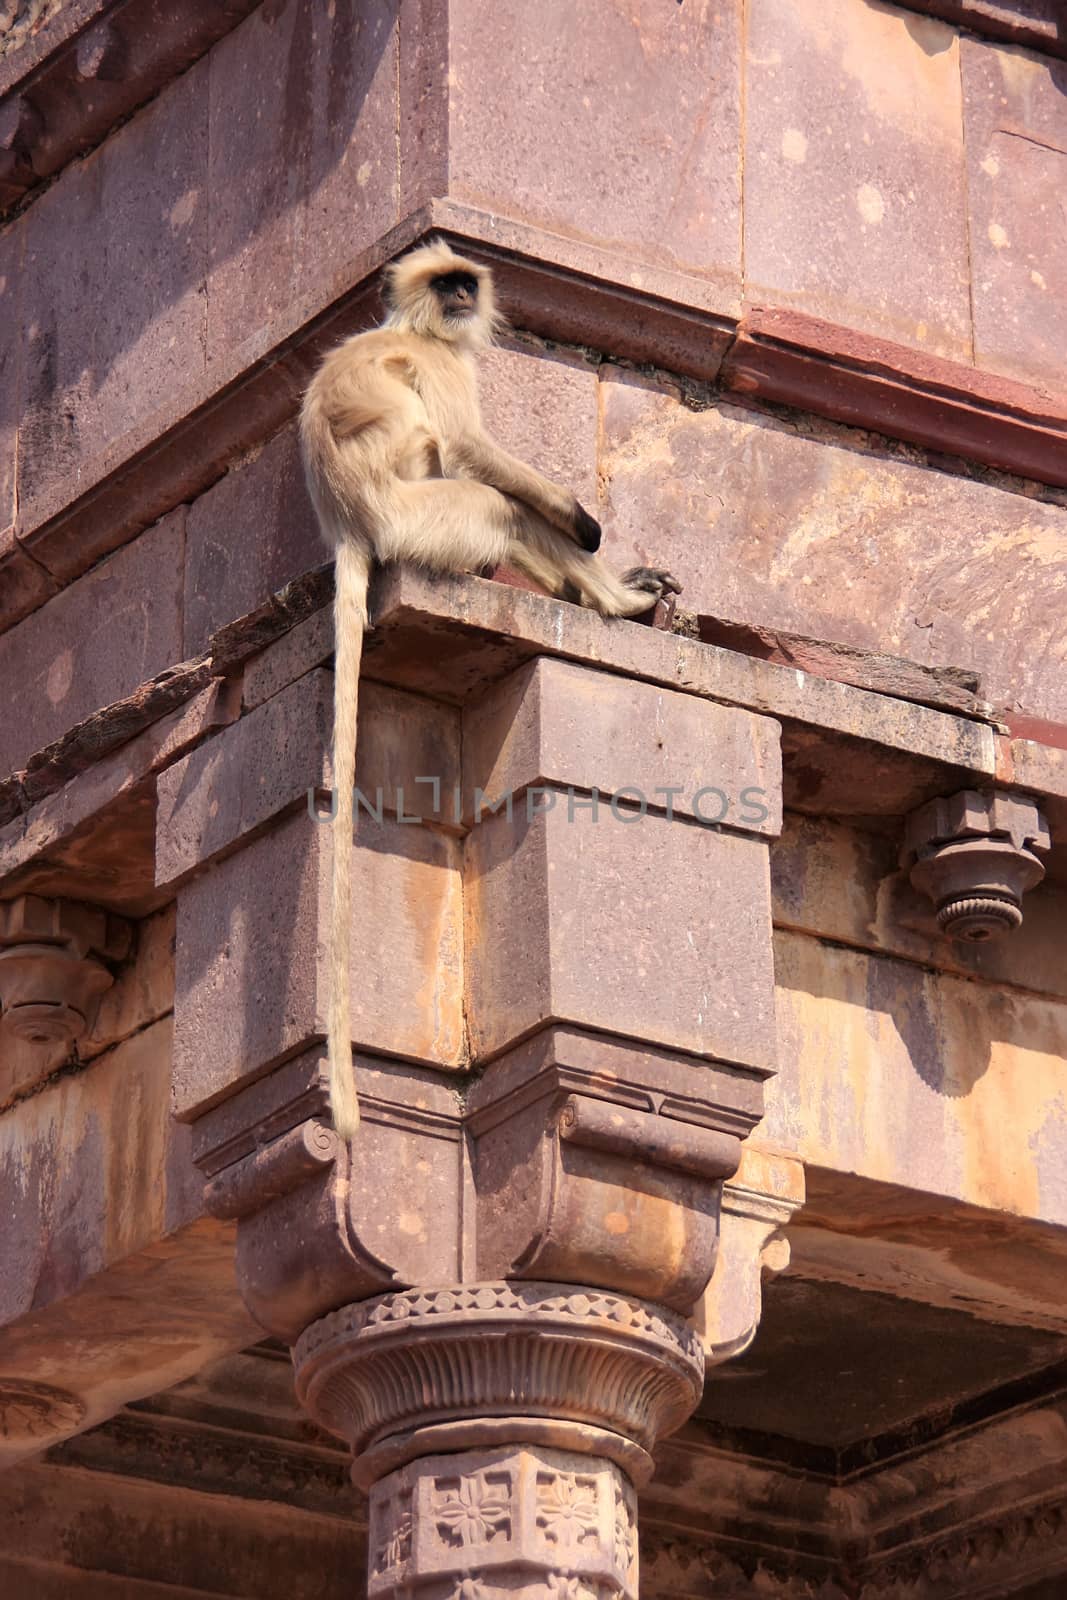 Gray langur (Semnopithecus dussumieri) sitting at Ranthambore Fort, Rajasthan, India